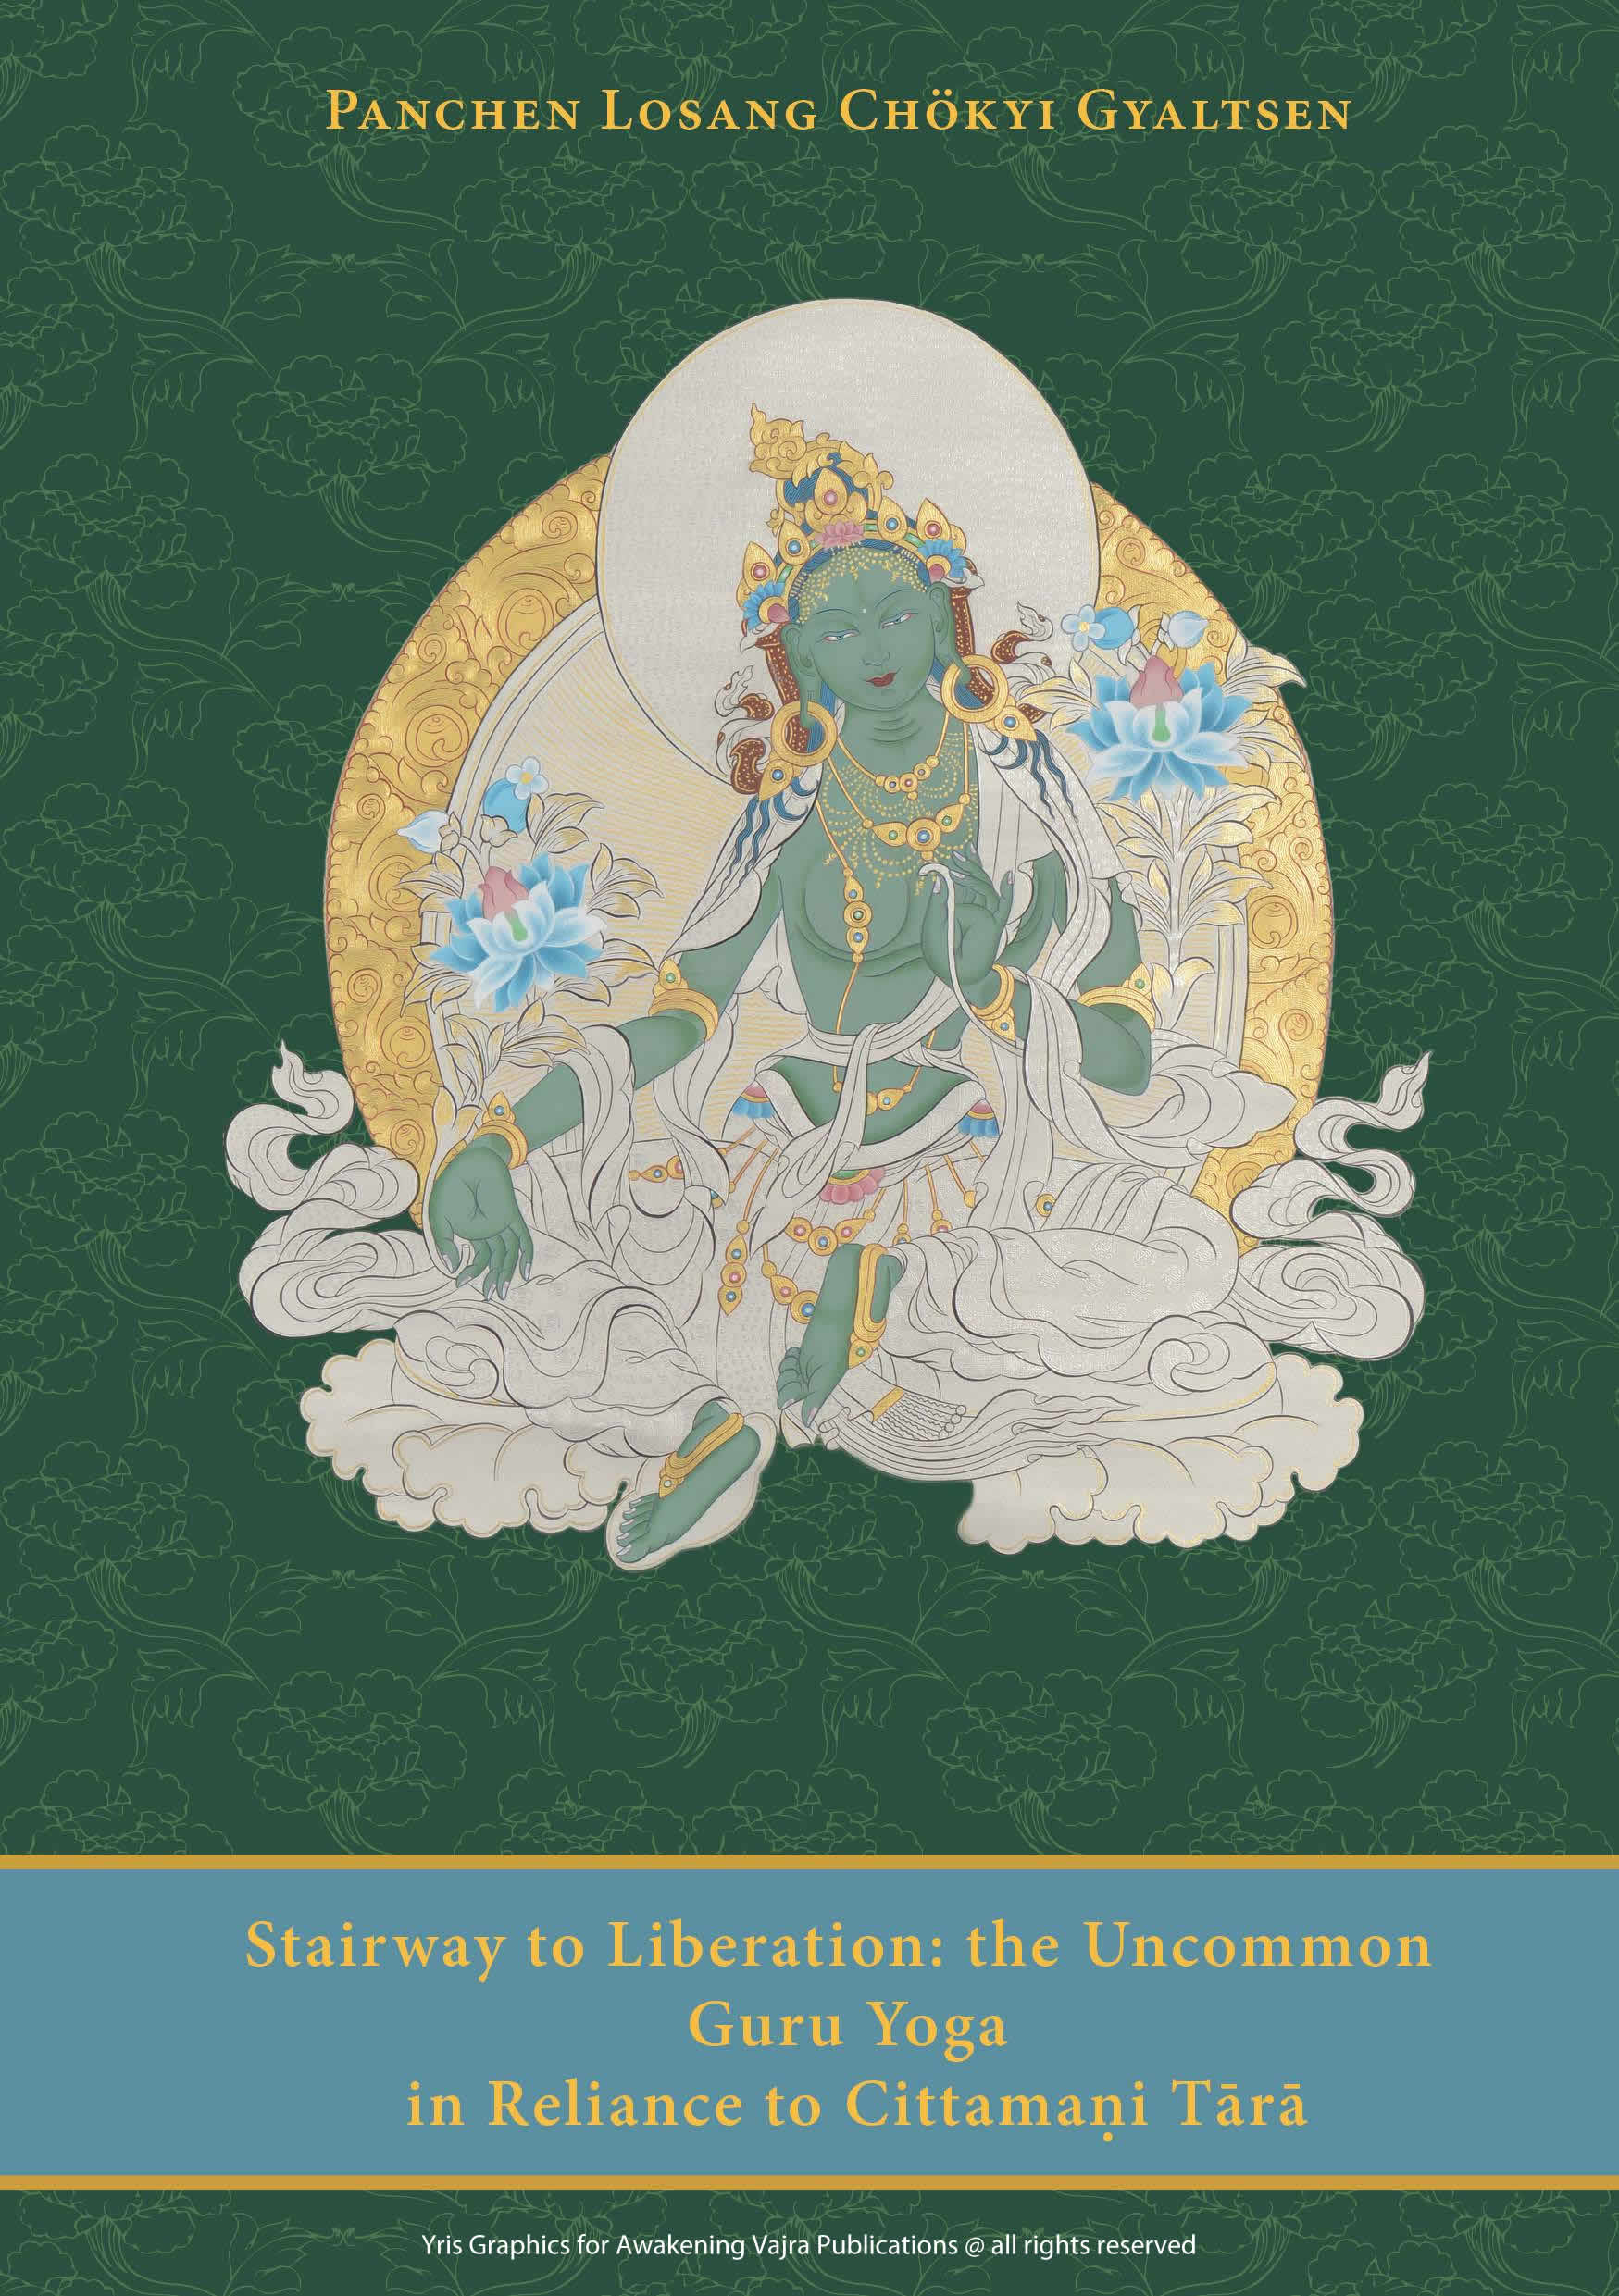 Booklet cover design – Tara